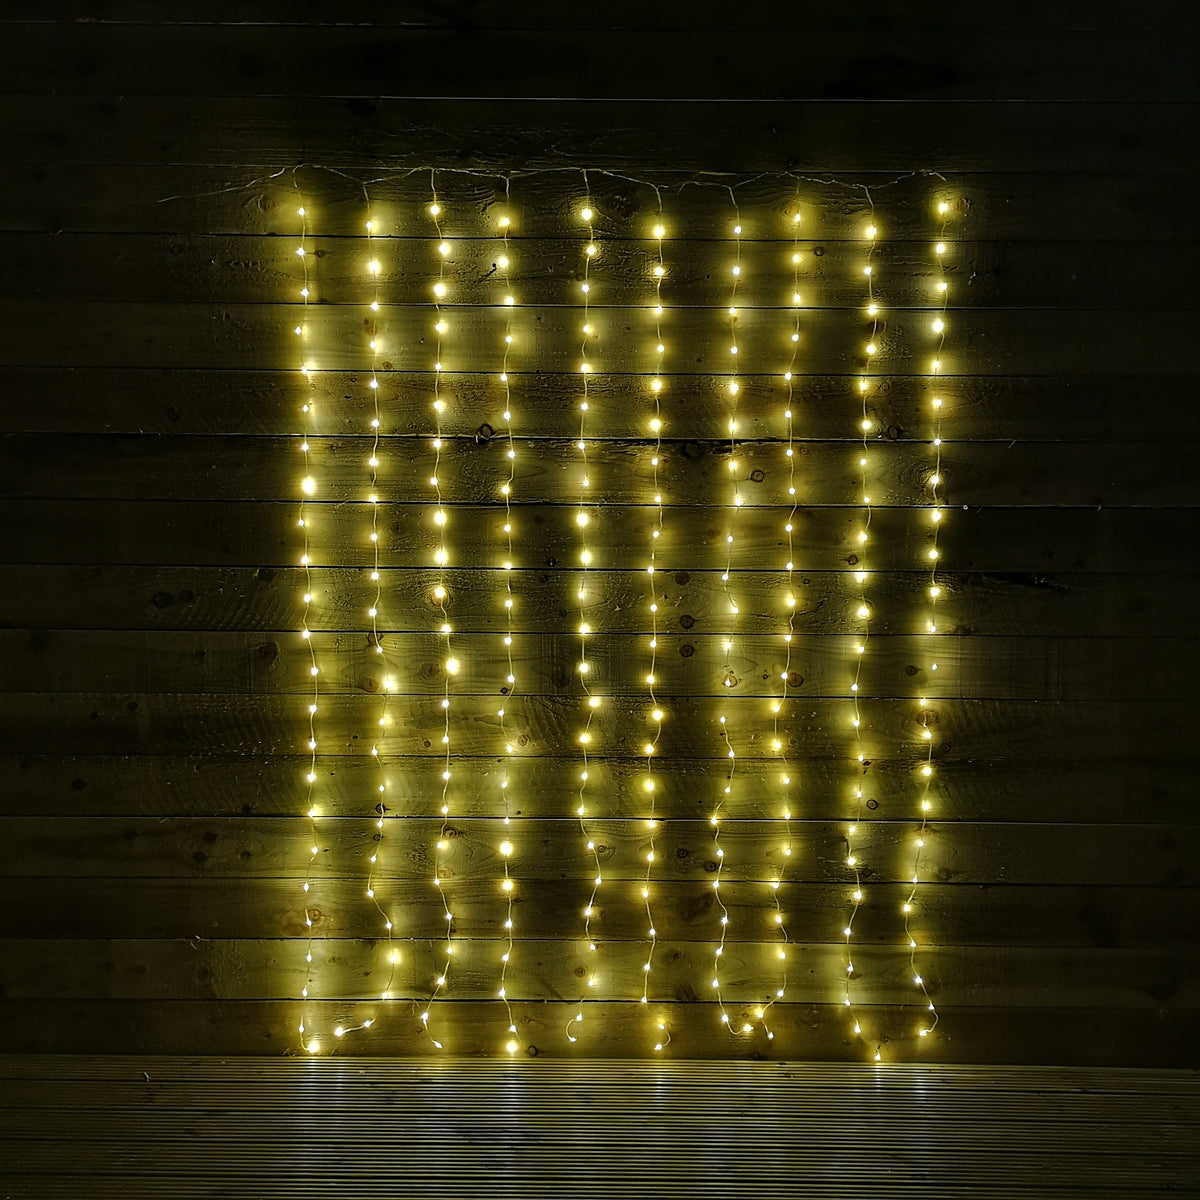 240 LED 2m x1.5m Flexibright Curtain Christmas Lights in Warm White